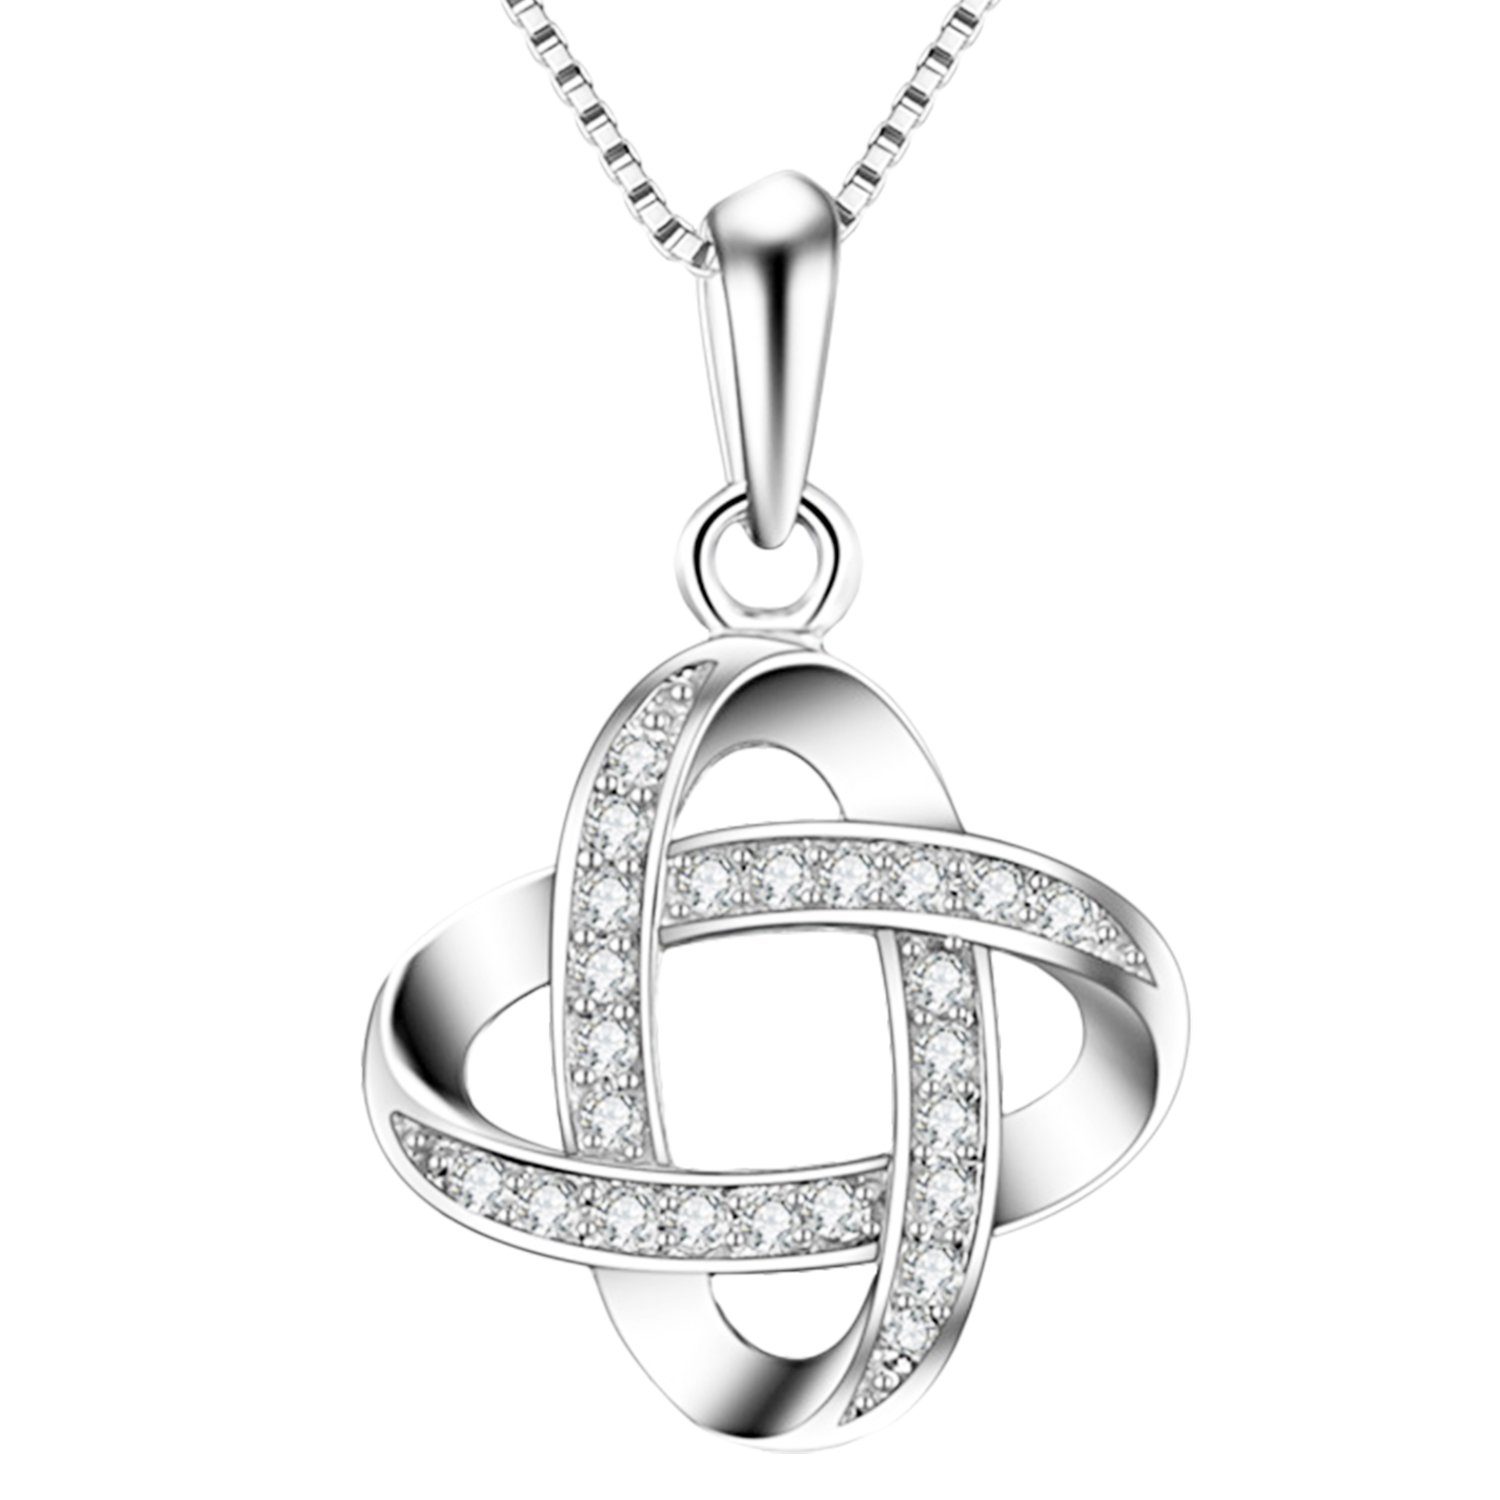 Ditz Kette mit Anhänger Halskette 925 Silber mit Infinity Ring Anhänger Zirkonia, Frauen Damen Geschenk Ideen Liebe Freundschaft